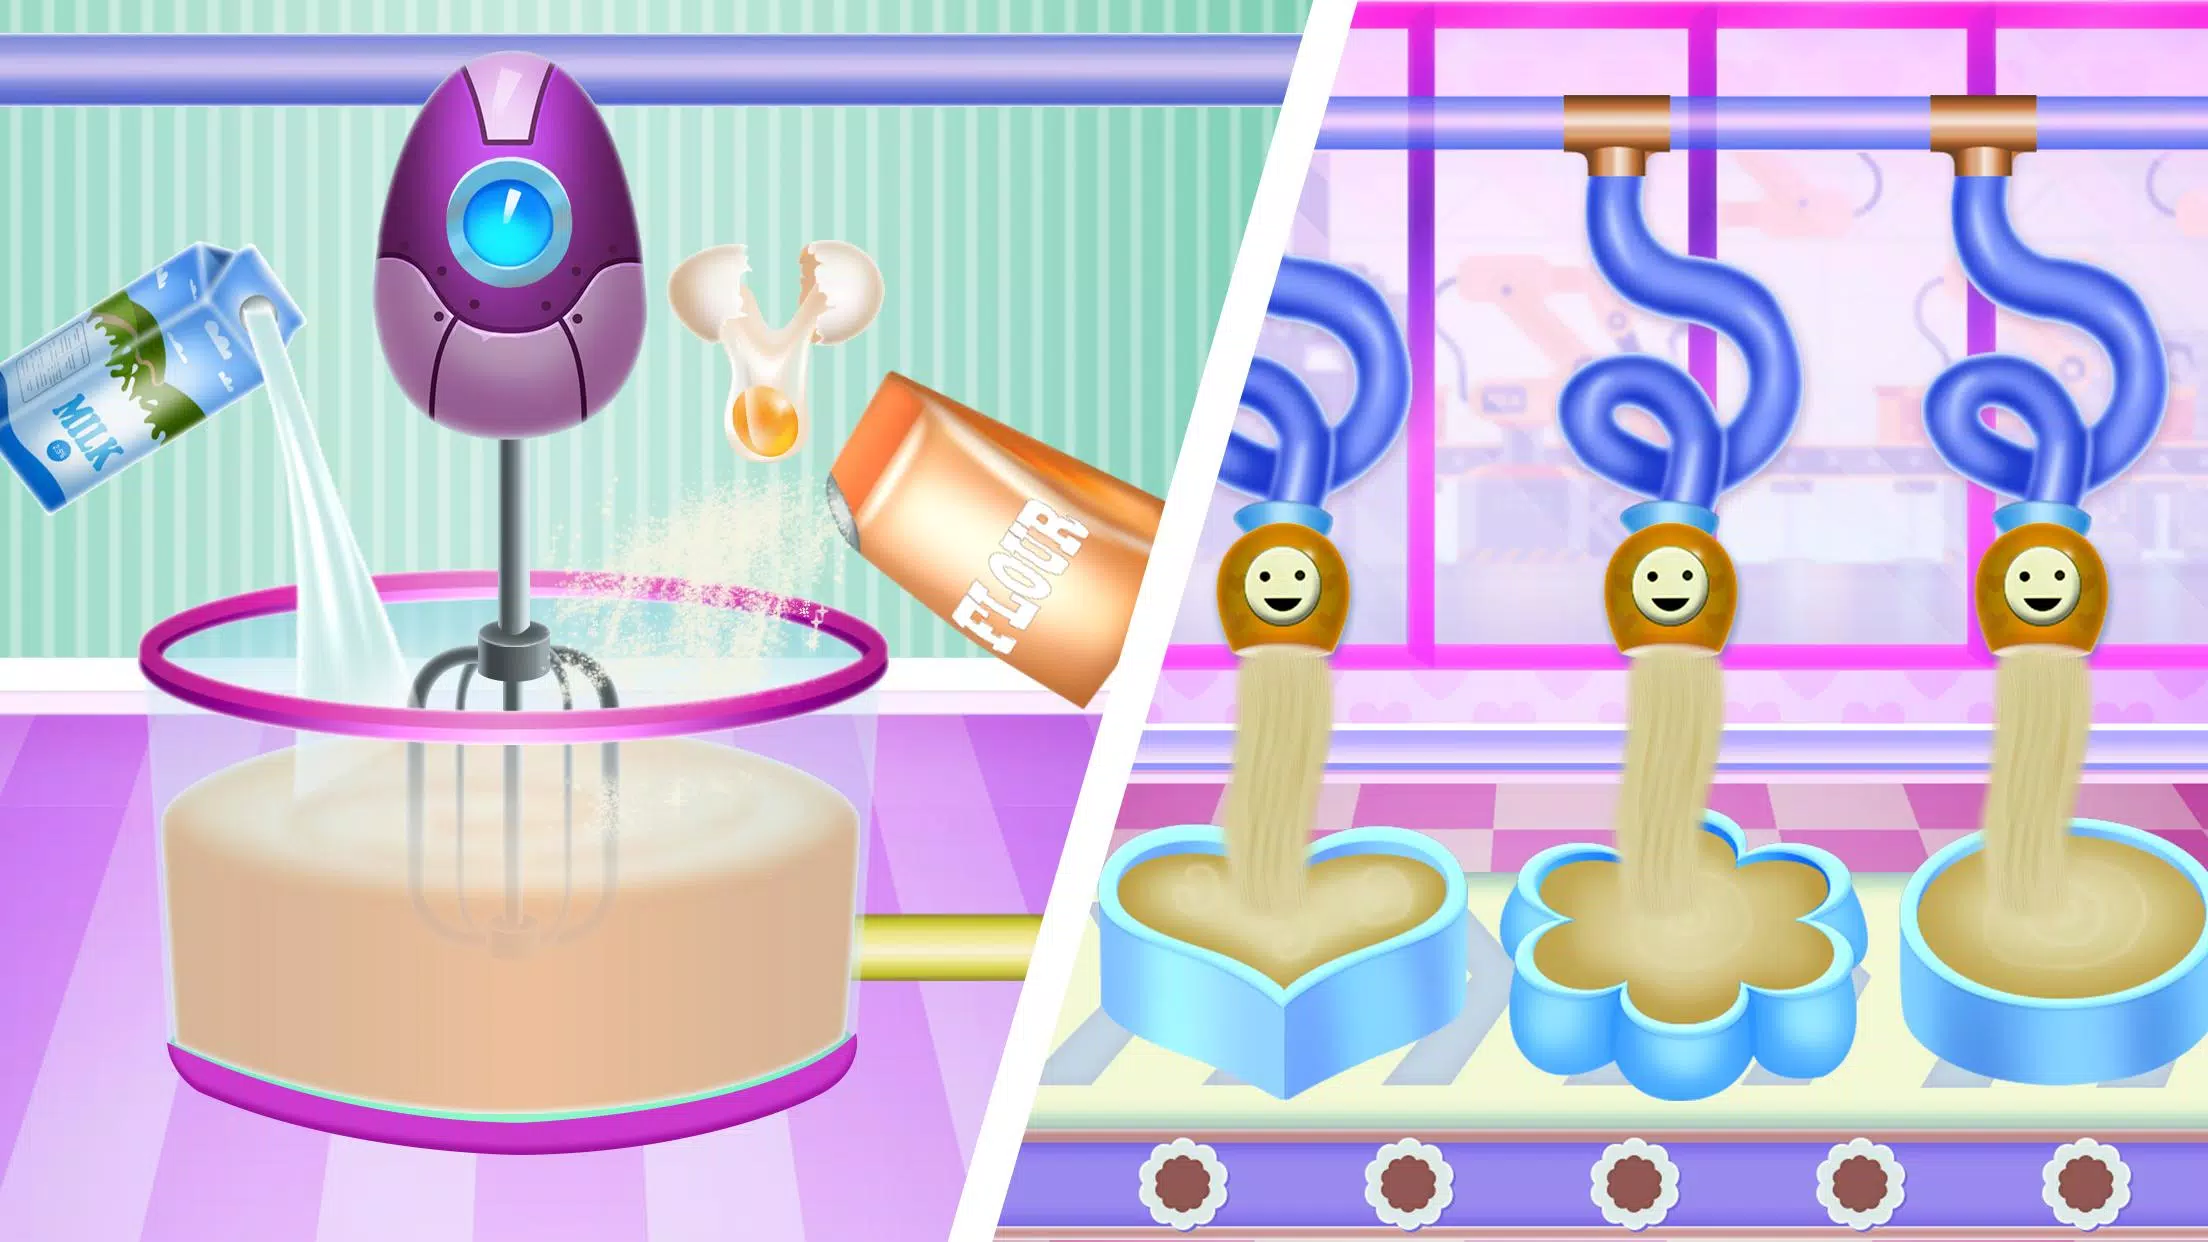 Chocolate Wedding Cake Factory :Dessert Maker Game para Android